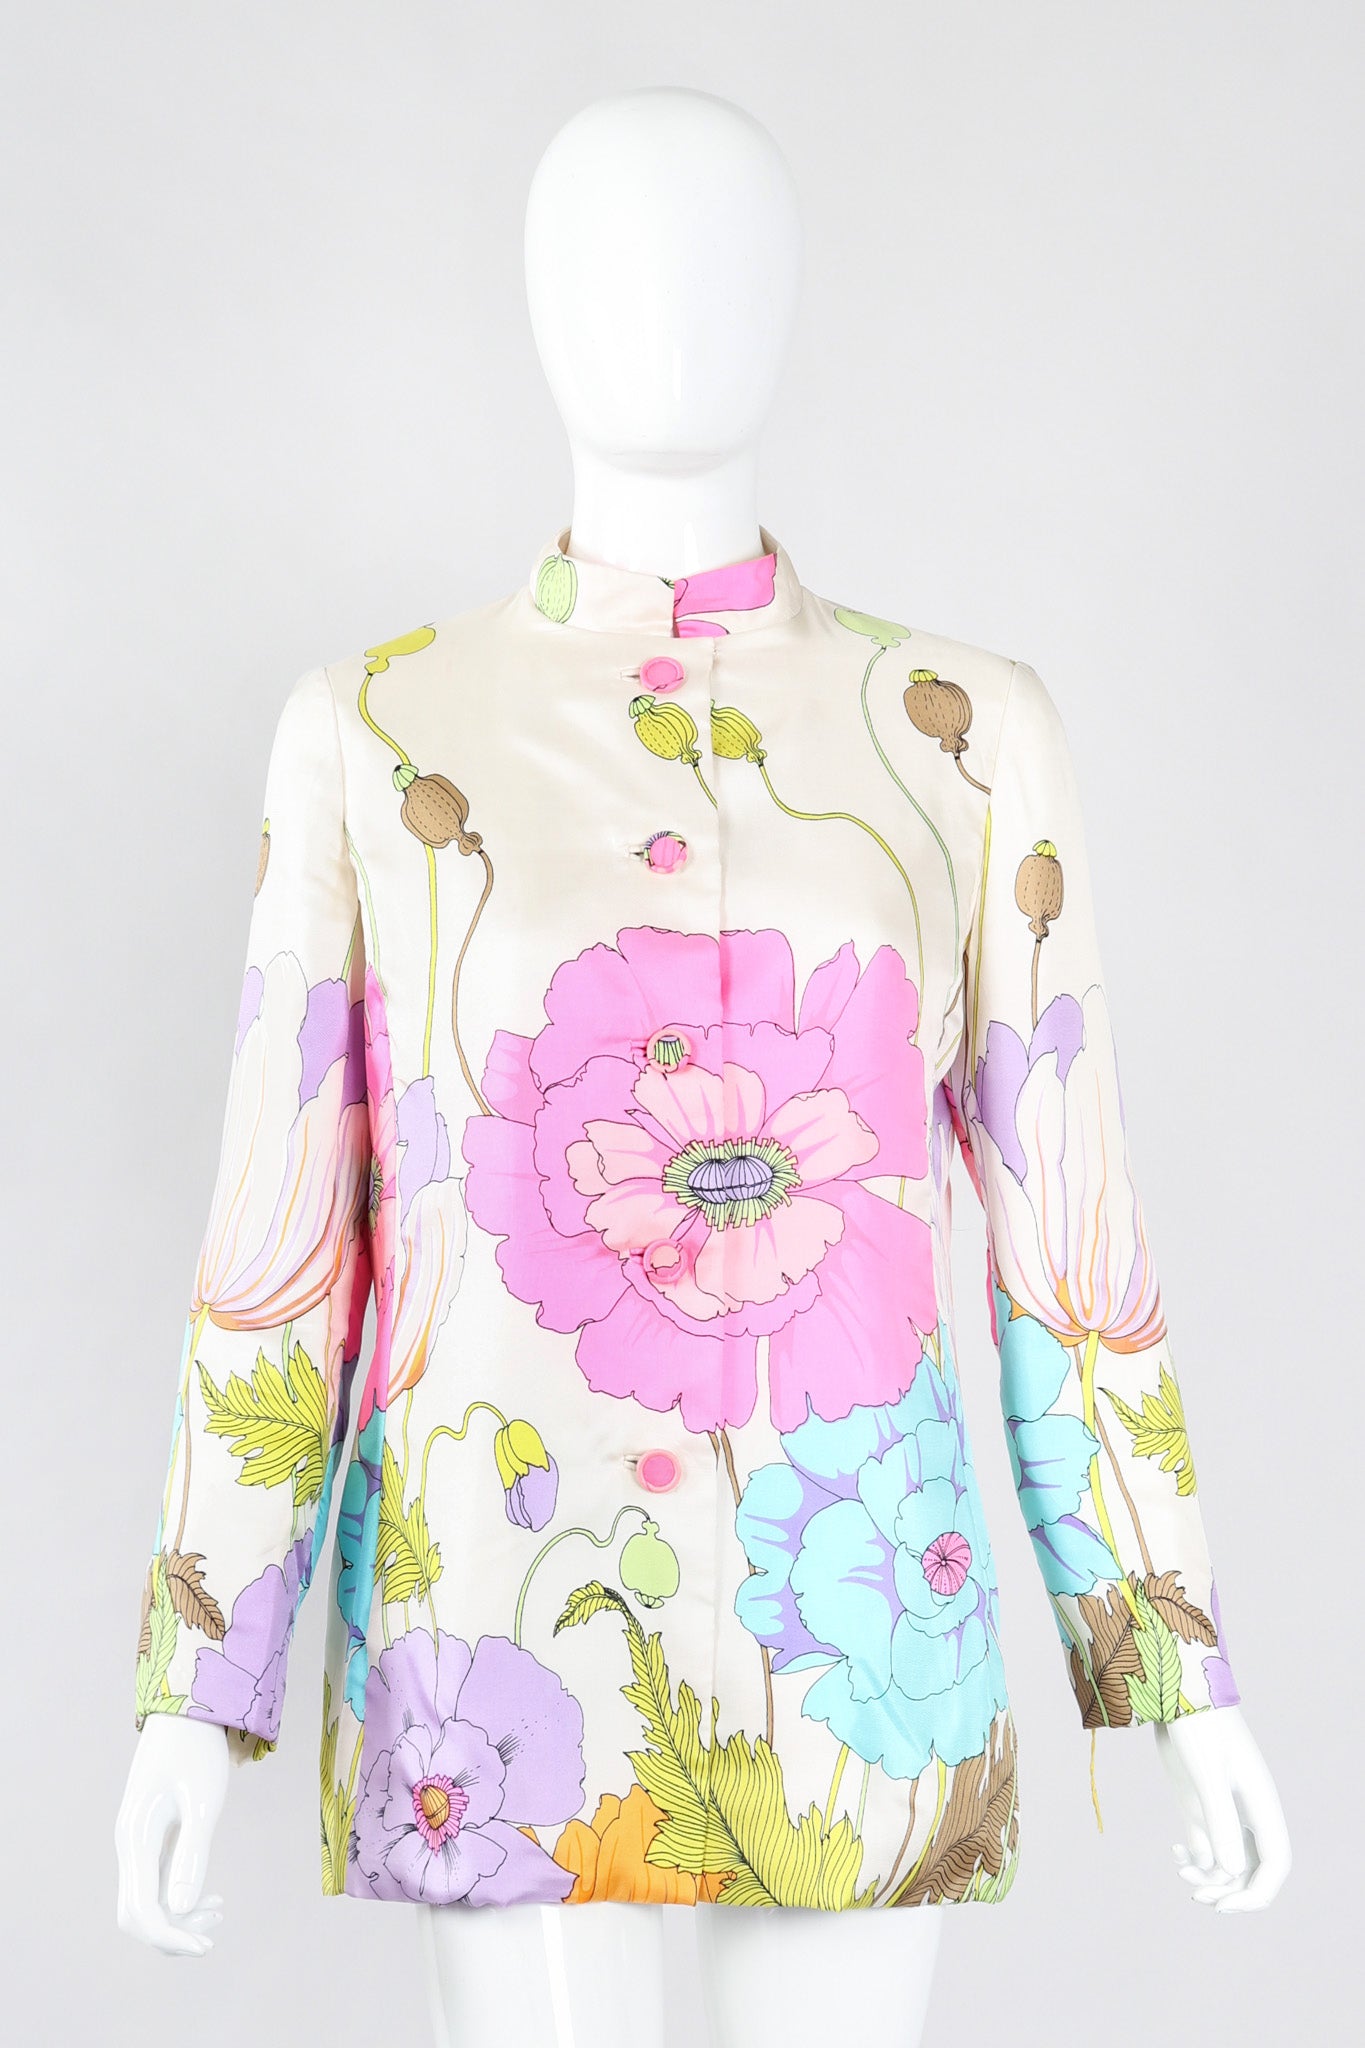 Recess Los Angeles Vintage B.H. Wragge I.Magnin Floral Print Silk Pajama Jacket & Pant Suit Set